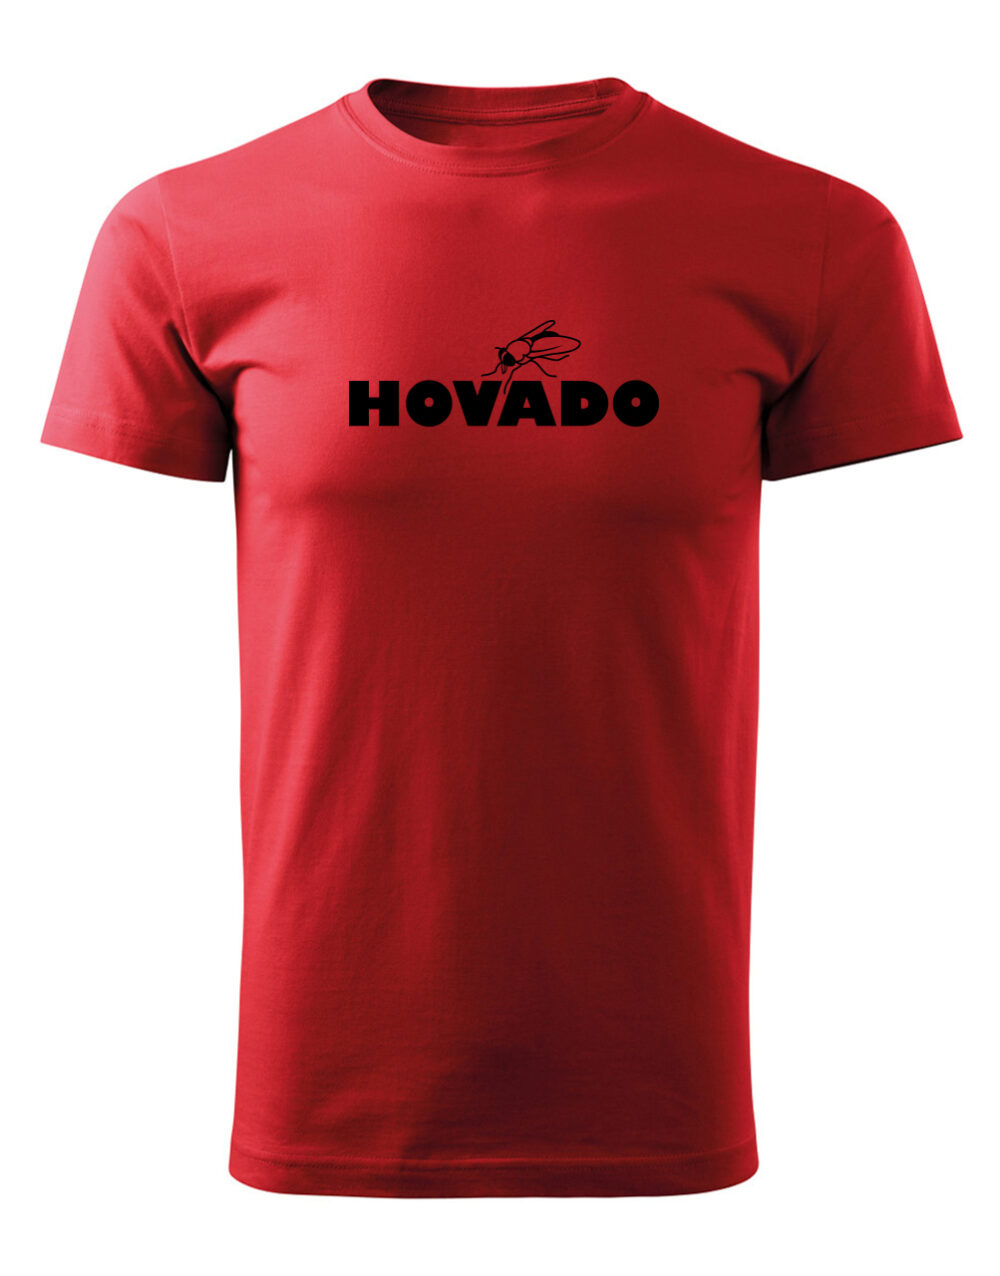 Pánské tričko s potiskem Hovado červená